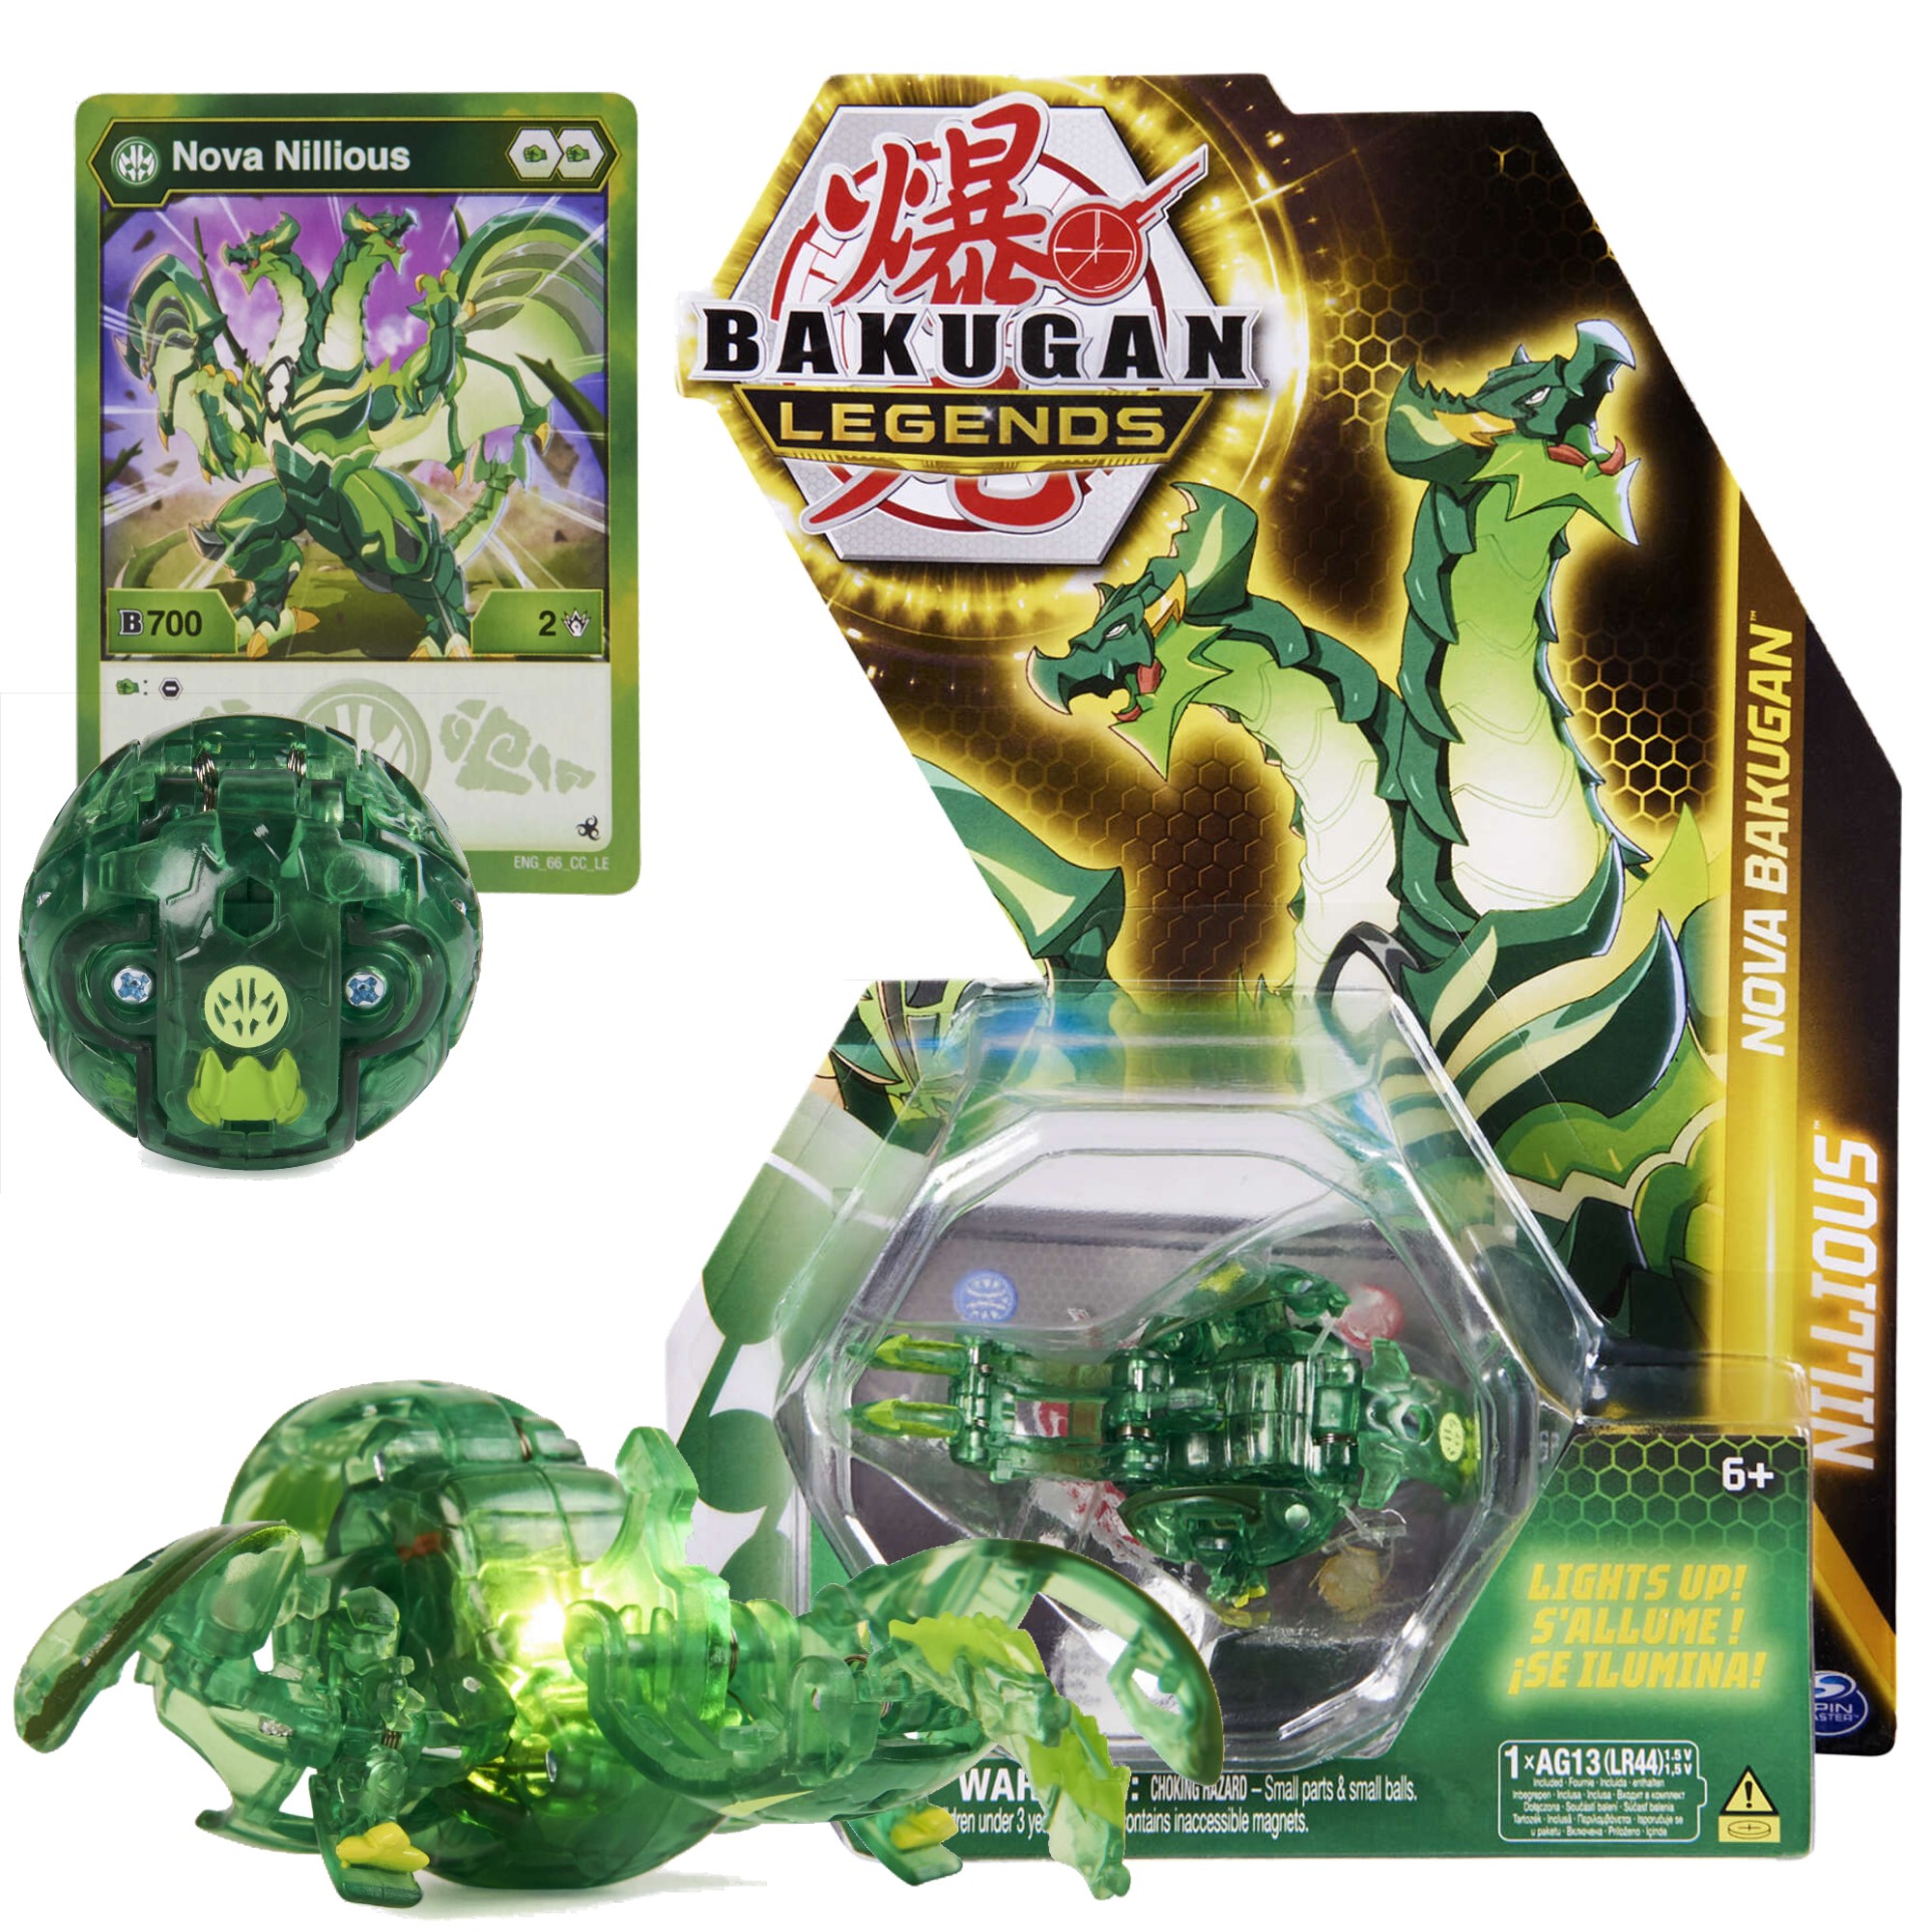 Bakugan Legends wiecca figurka Nova Nillious i karty